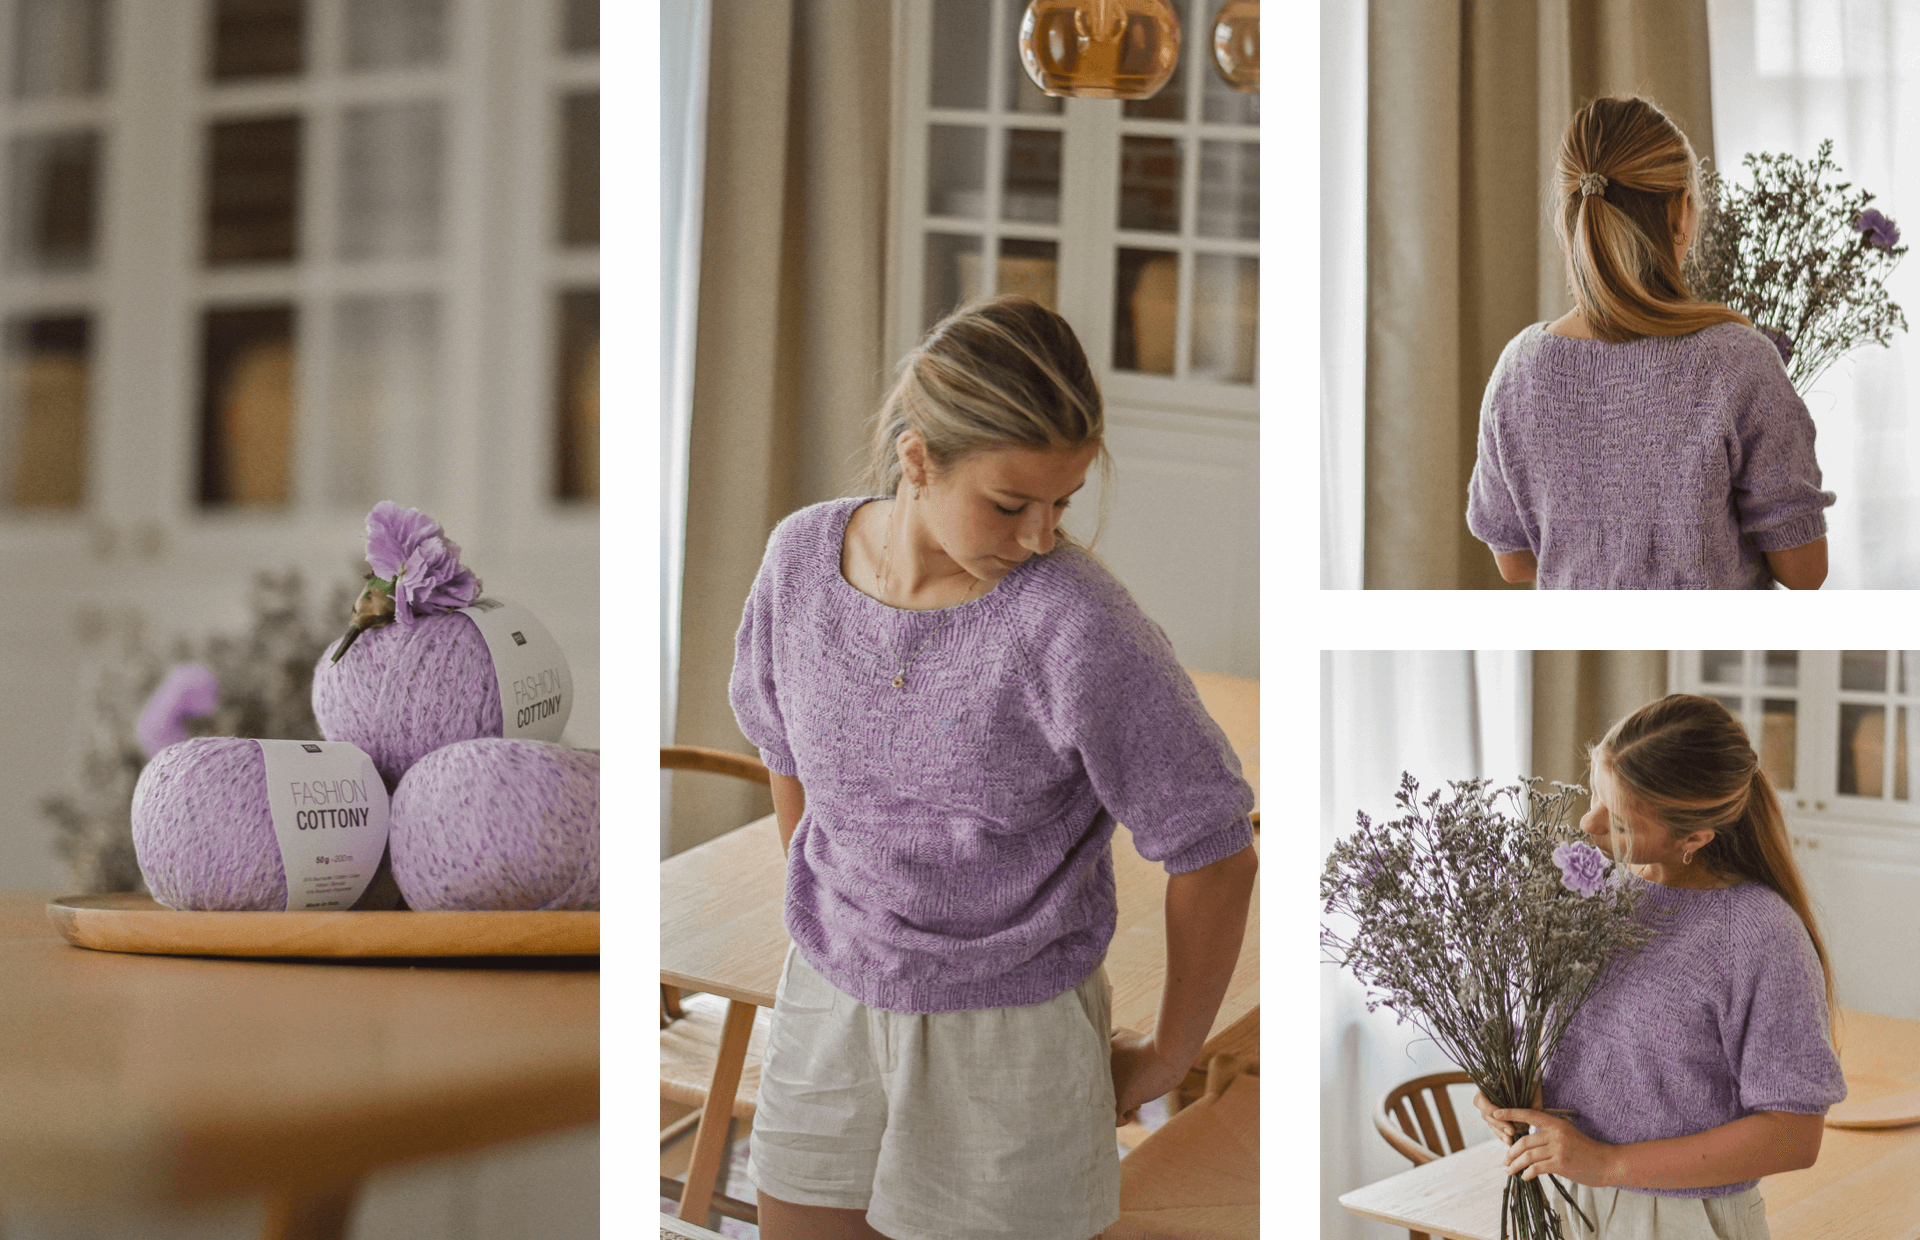 Sweterek Fashion Cottony